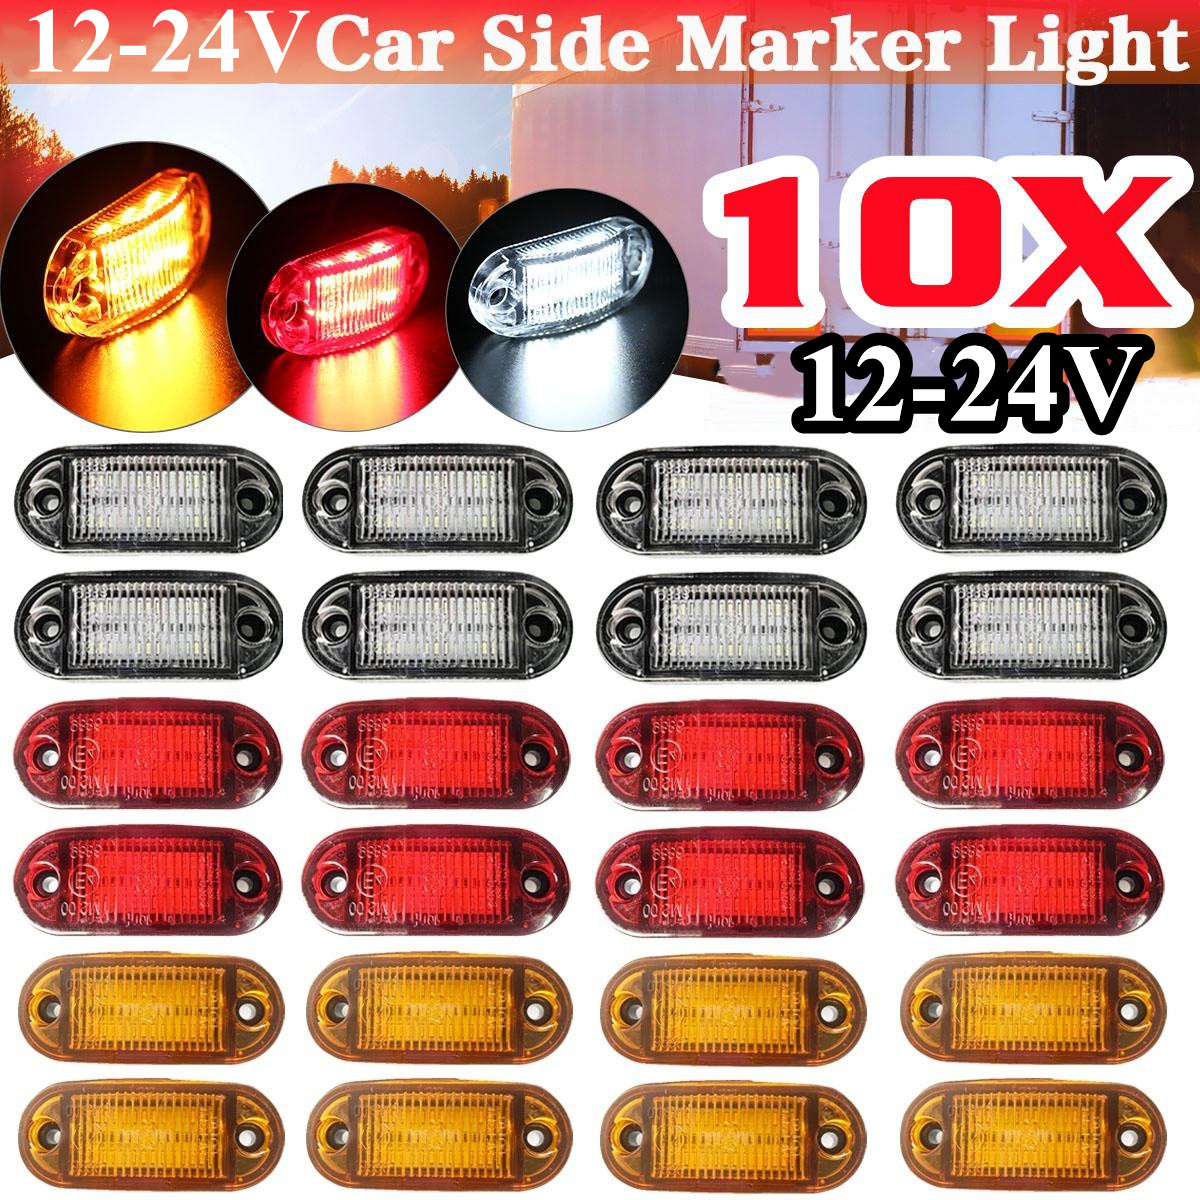 4-pcs LED Side Marker Lichter, 12-24V weiße rote doppelseitige Warnlampe,  LKW Anhänger Parklicht